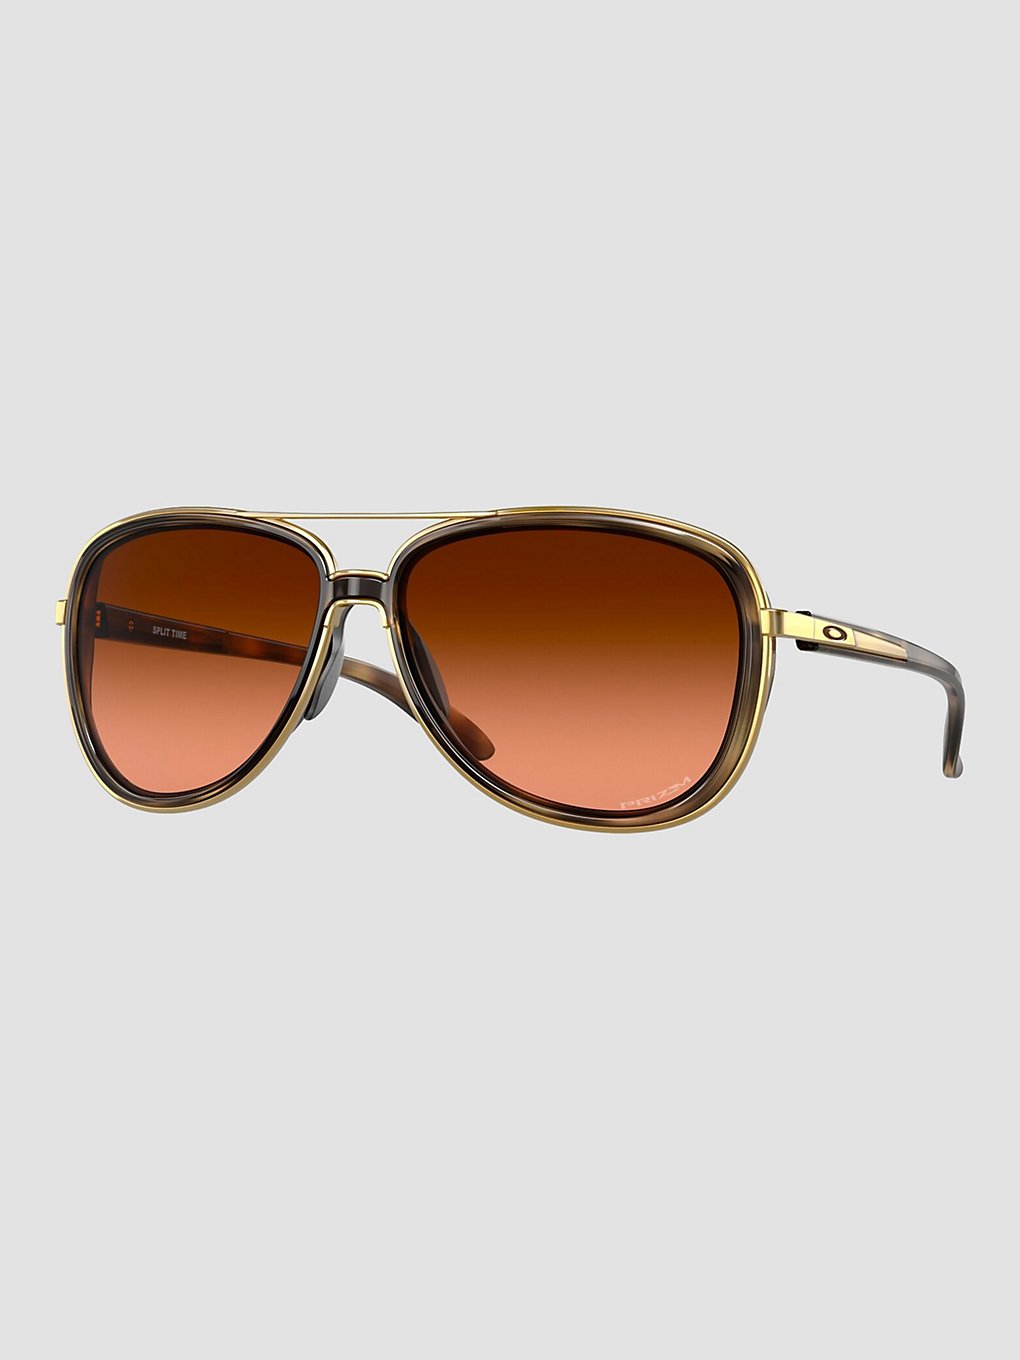 Oakley Split Time Brown Tortoise Sunglasses prizm brown gradient